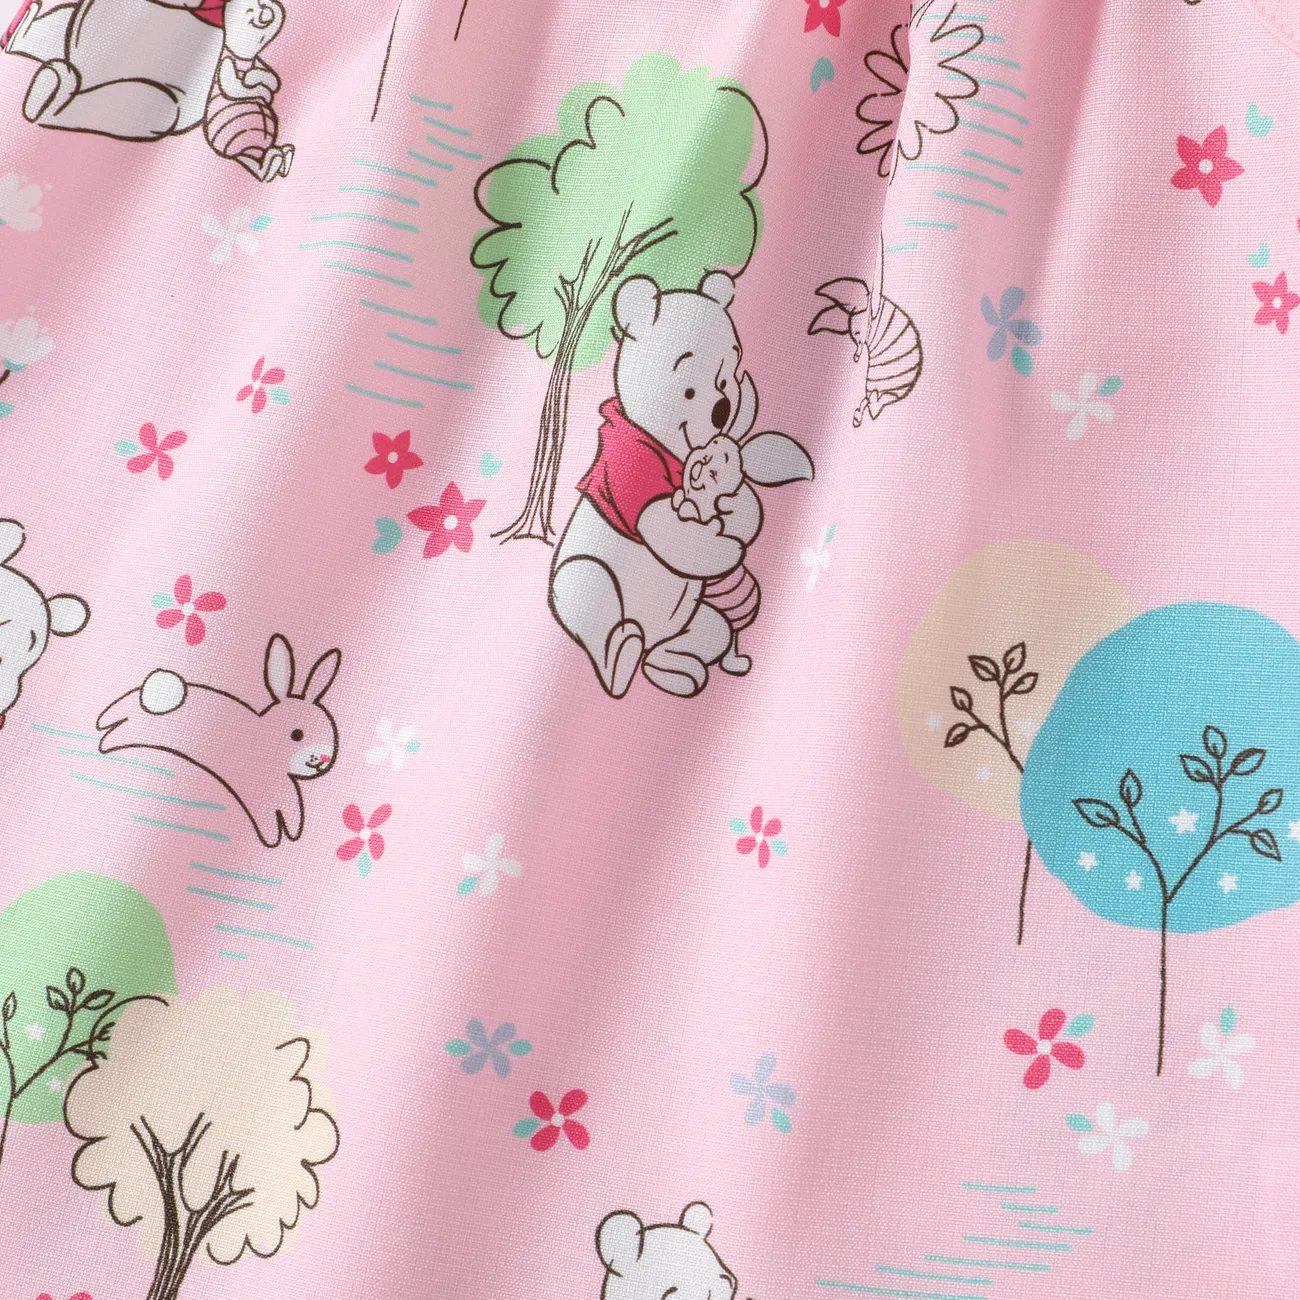 Disney Winnie the Pooh Baby Girls 1pc Character Bowknot Floral Print Sleeveless Dress Light Pink big image 1